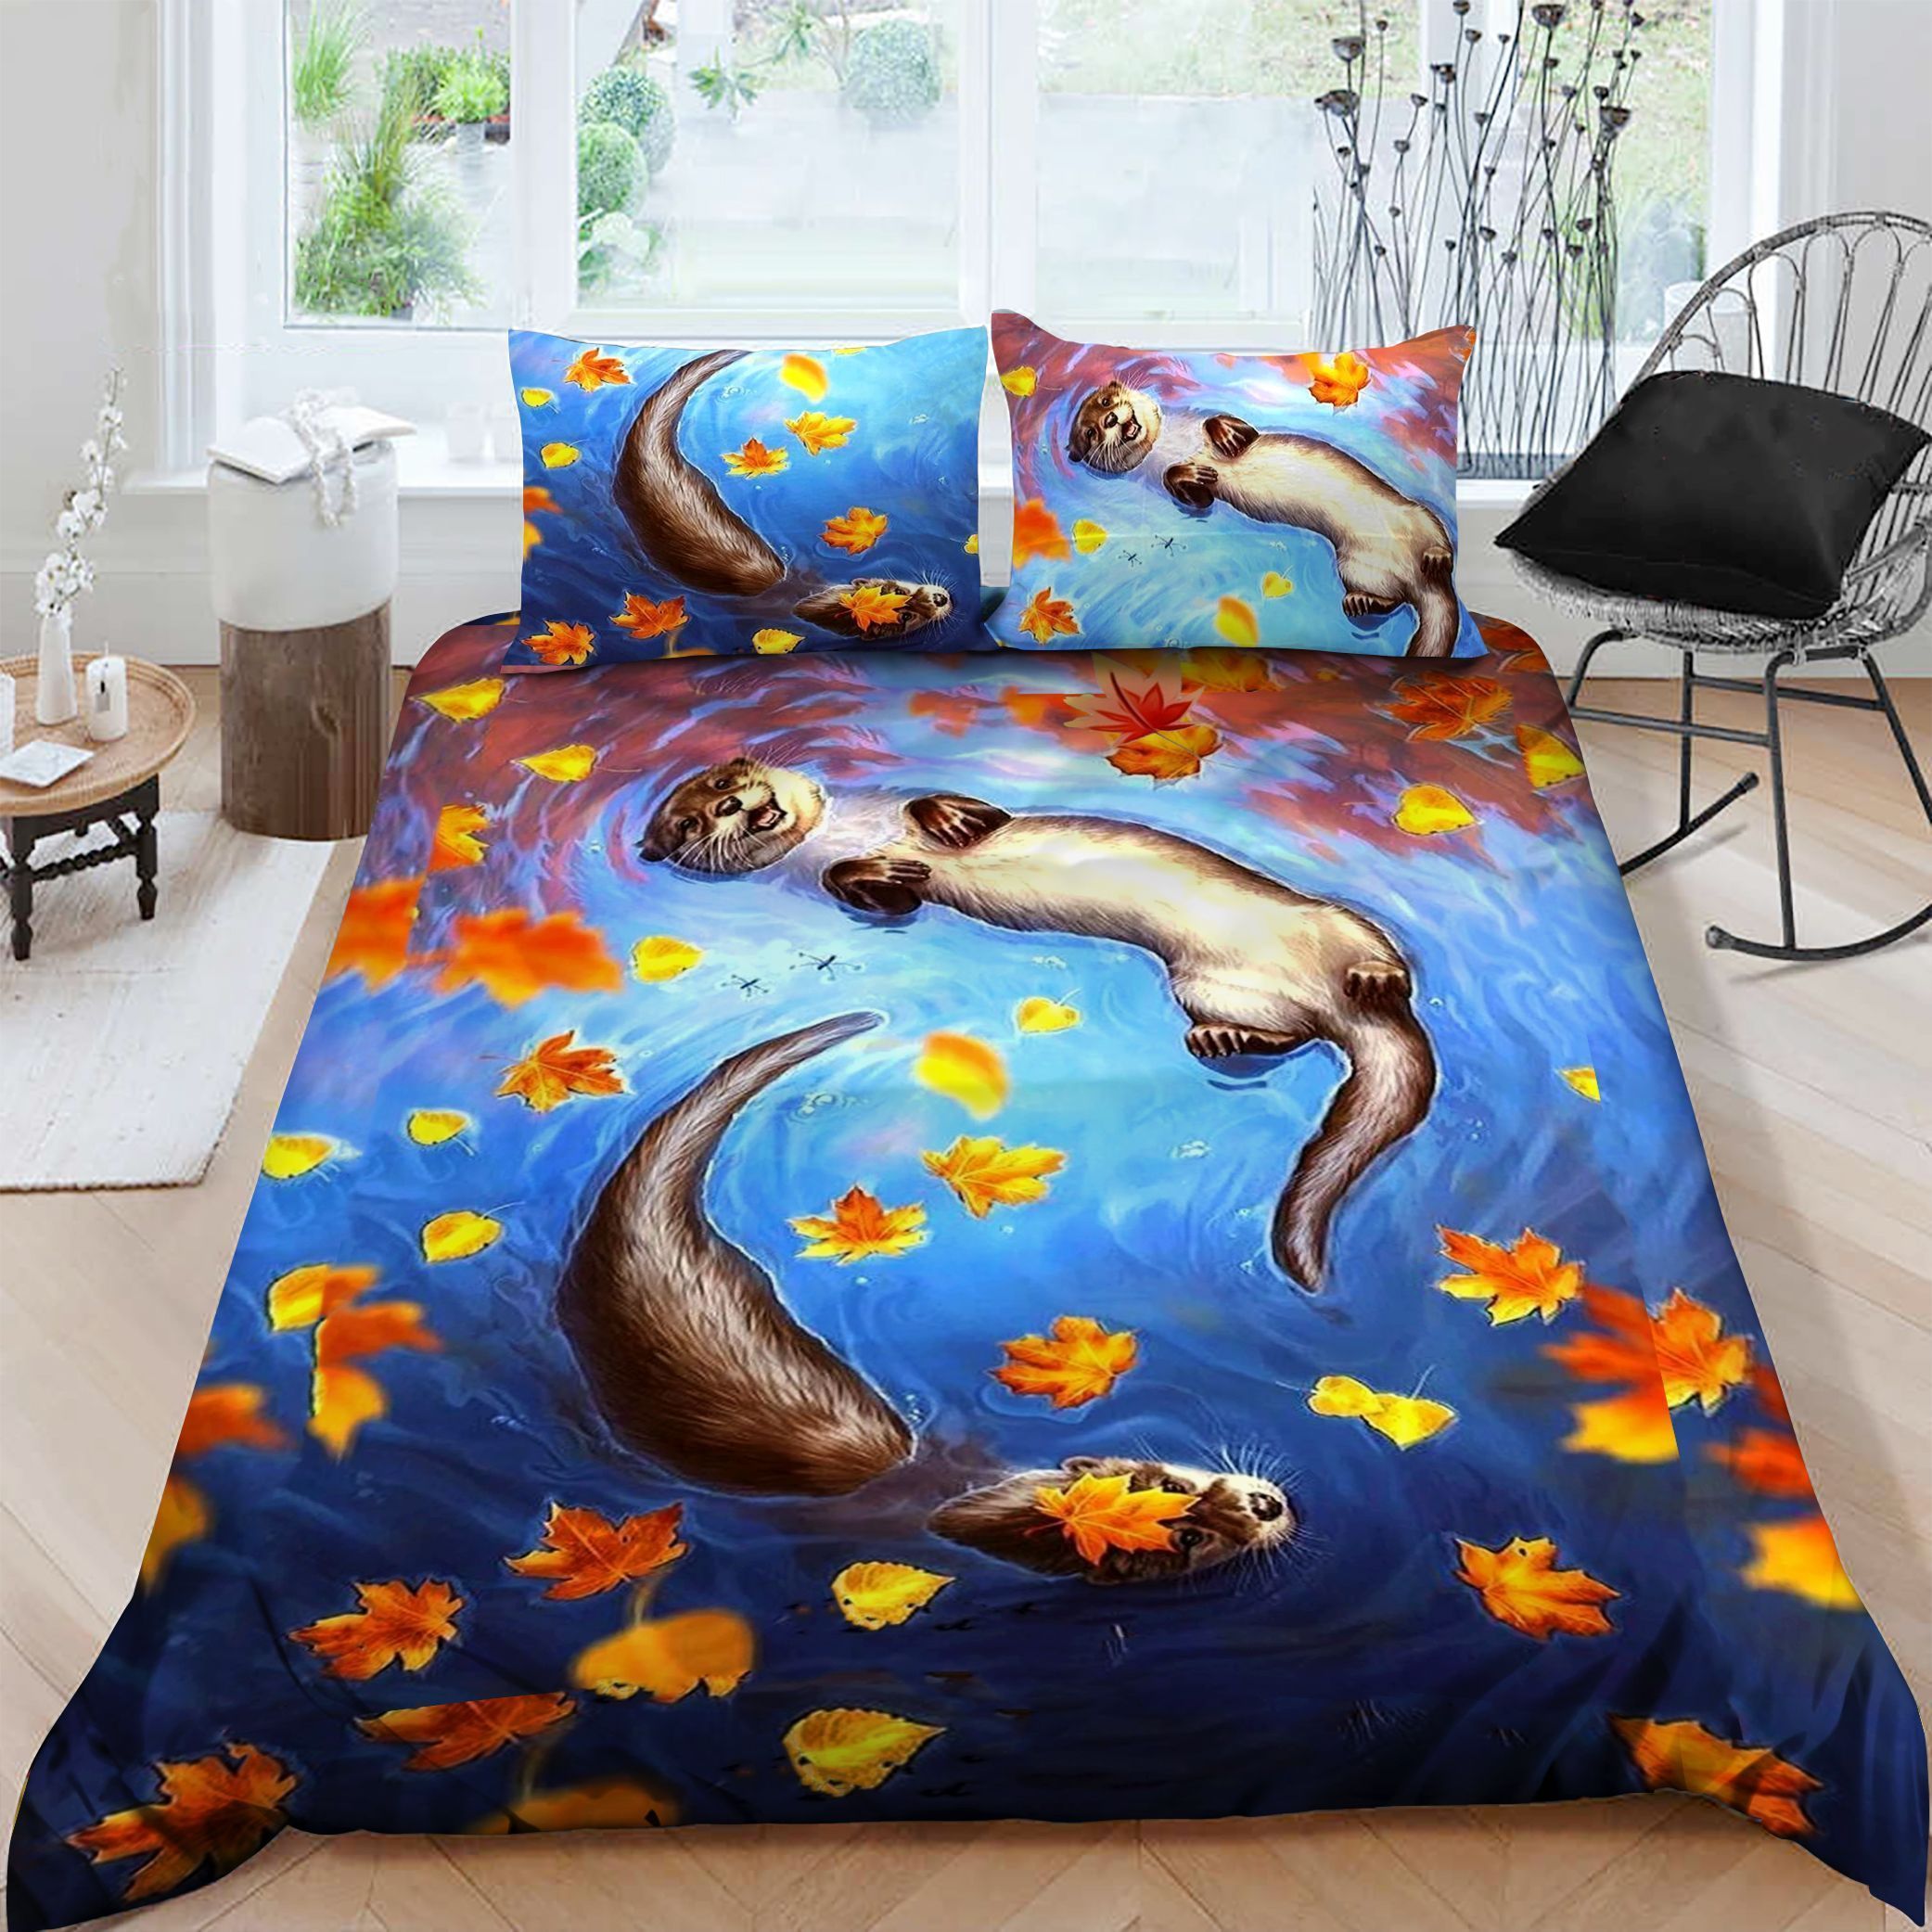 Otter Cotton Bed Sheets Spread Comforter Duvet Cover Bedding Sets